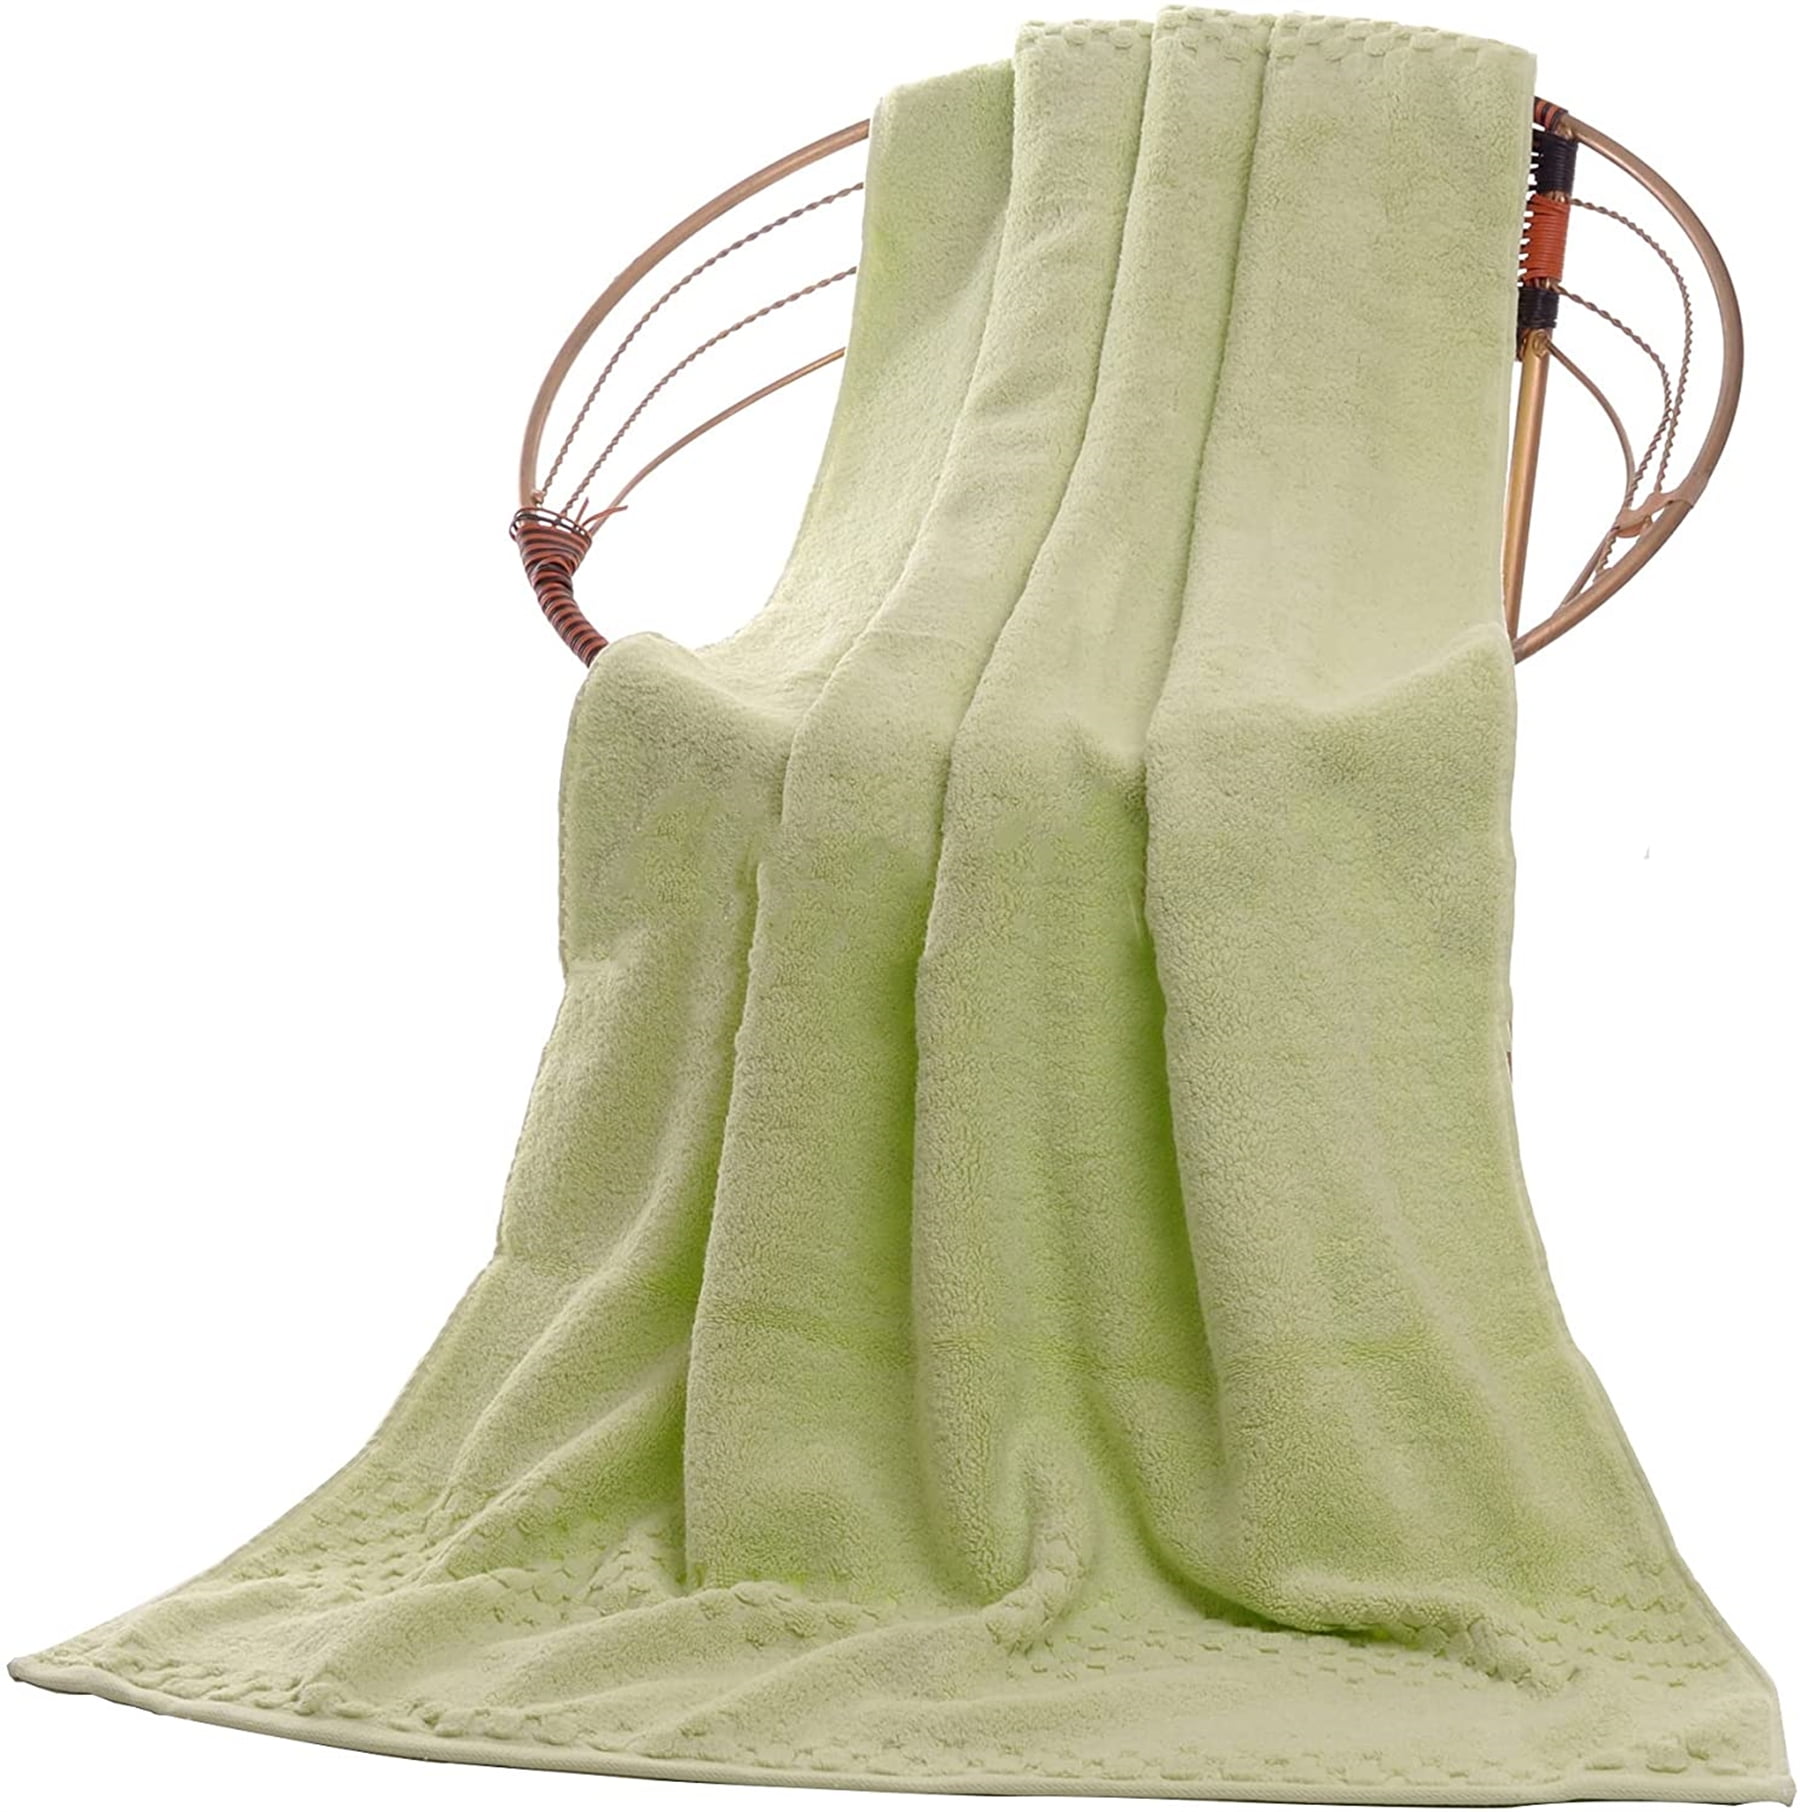 Extra Large Jumbo Bath Sheet Pure Egyptian Cotton Big Towels Super Soft XL  Towel